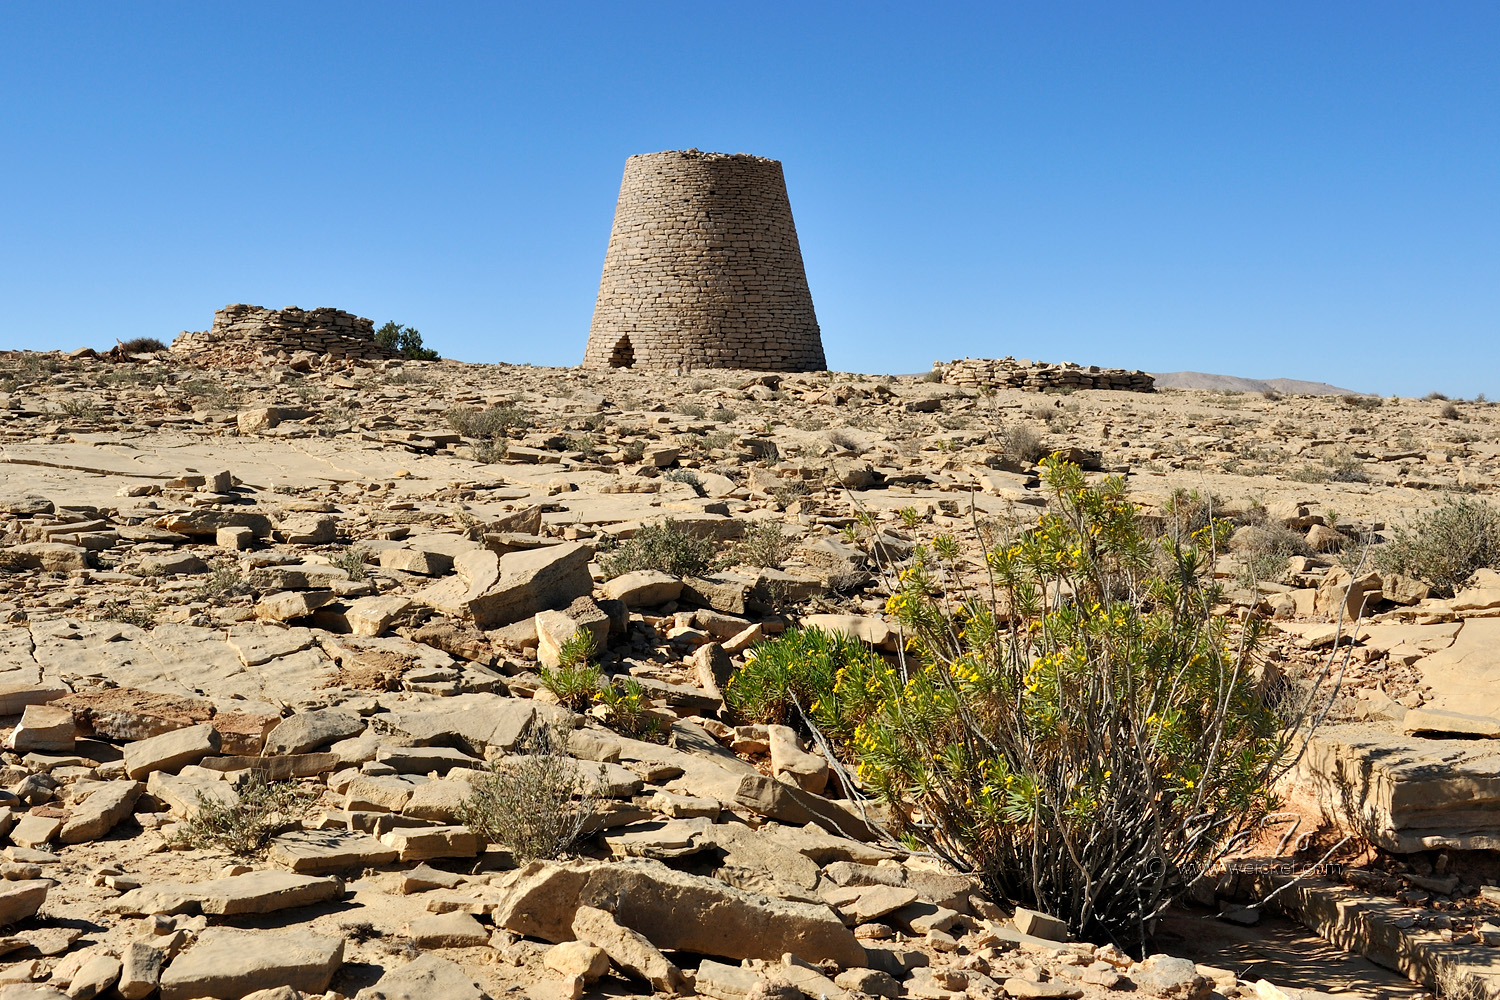 Burj (Gravetower) on the way to Wadi Fins